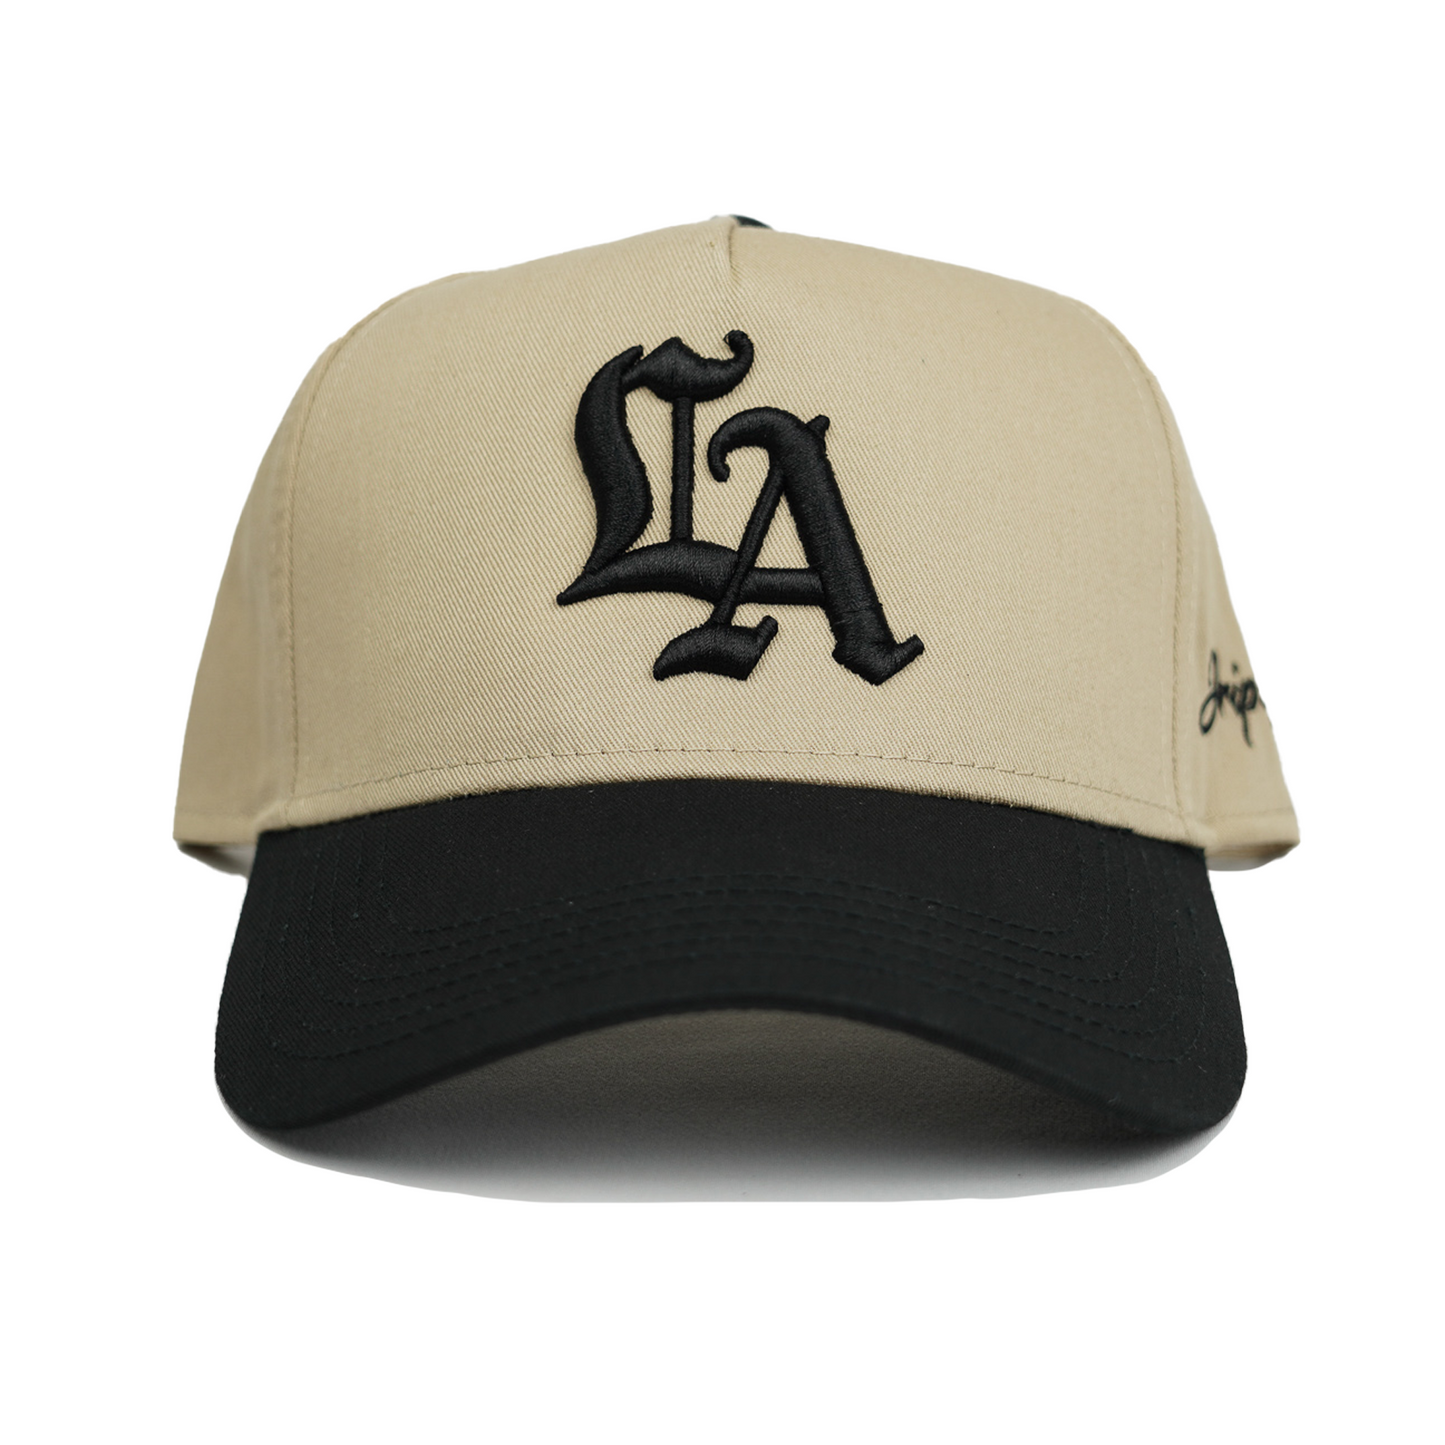 Old English LA Snapback Hat (KHAKI/BLACK)